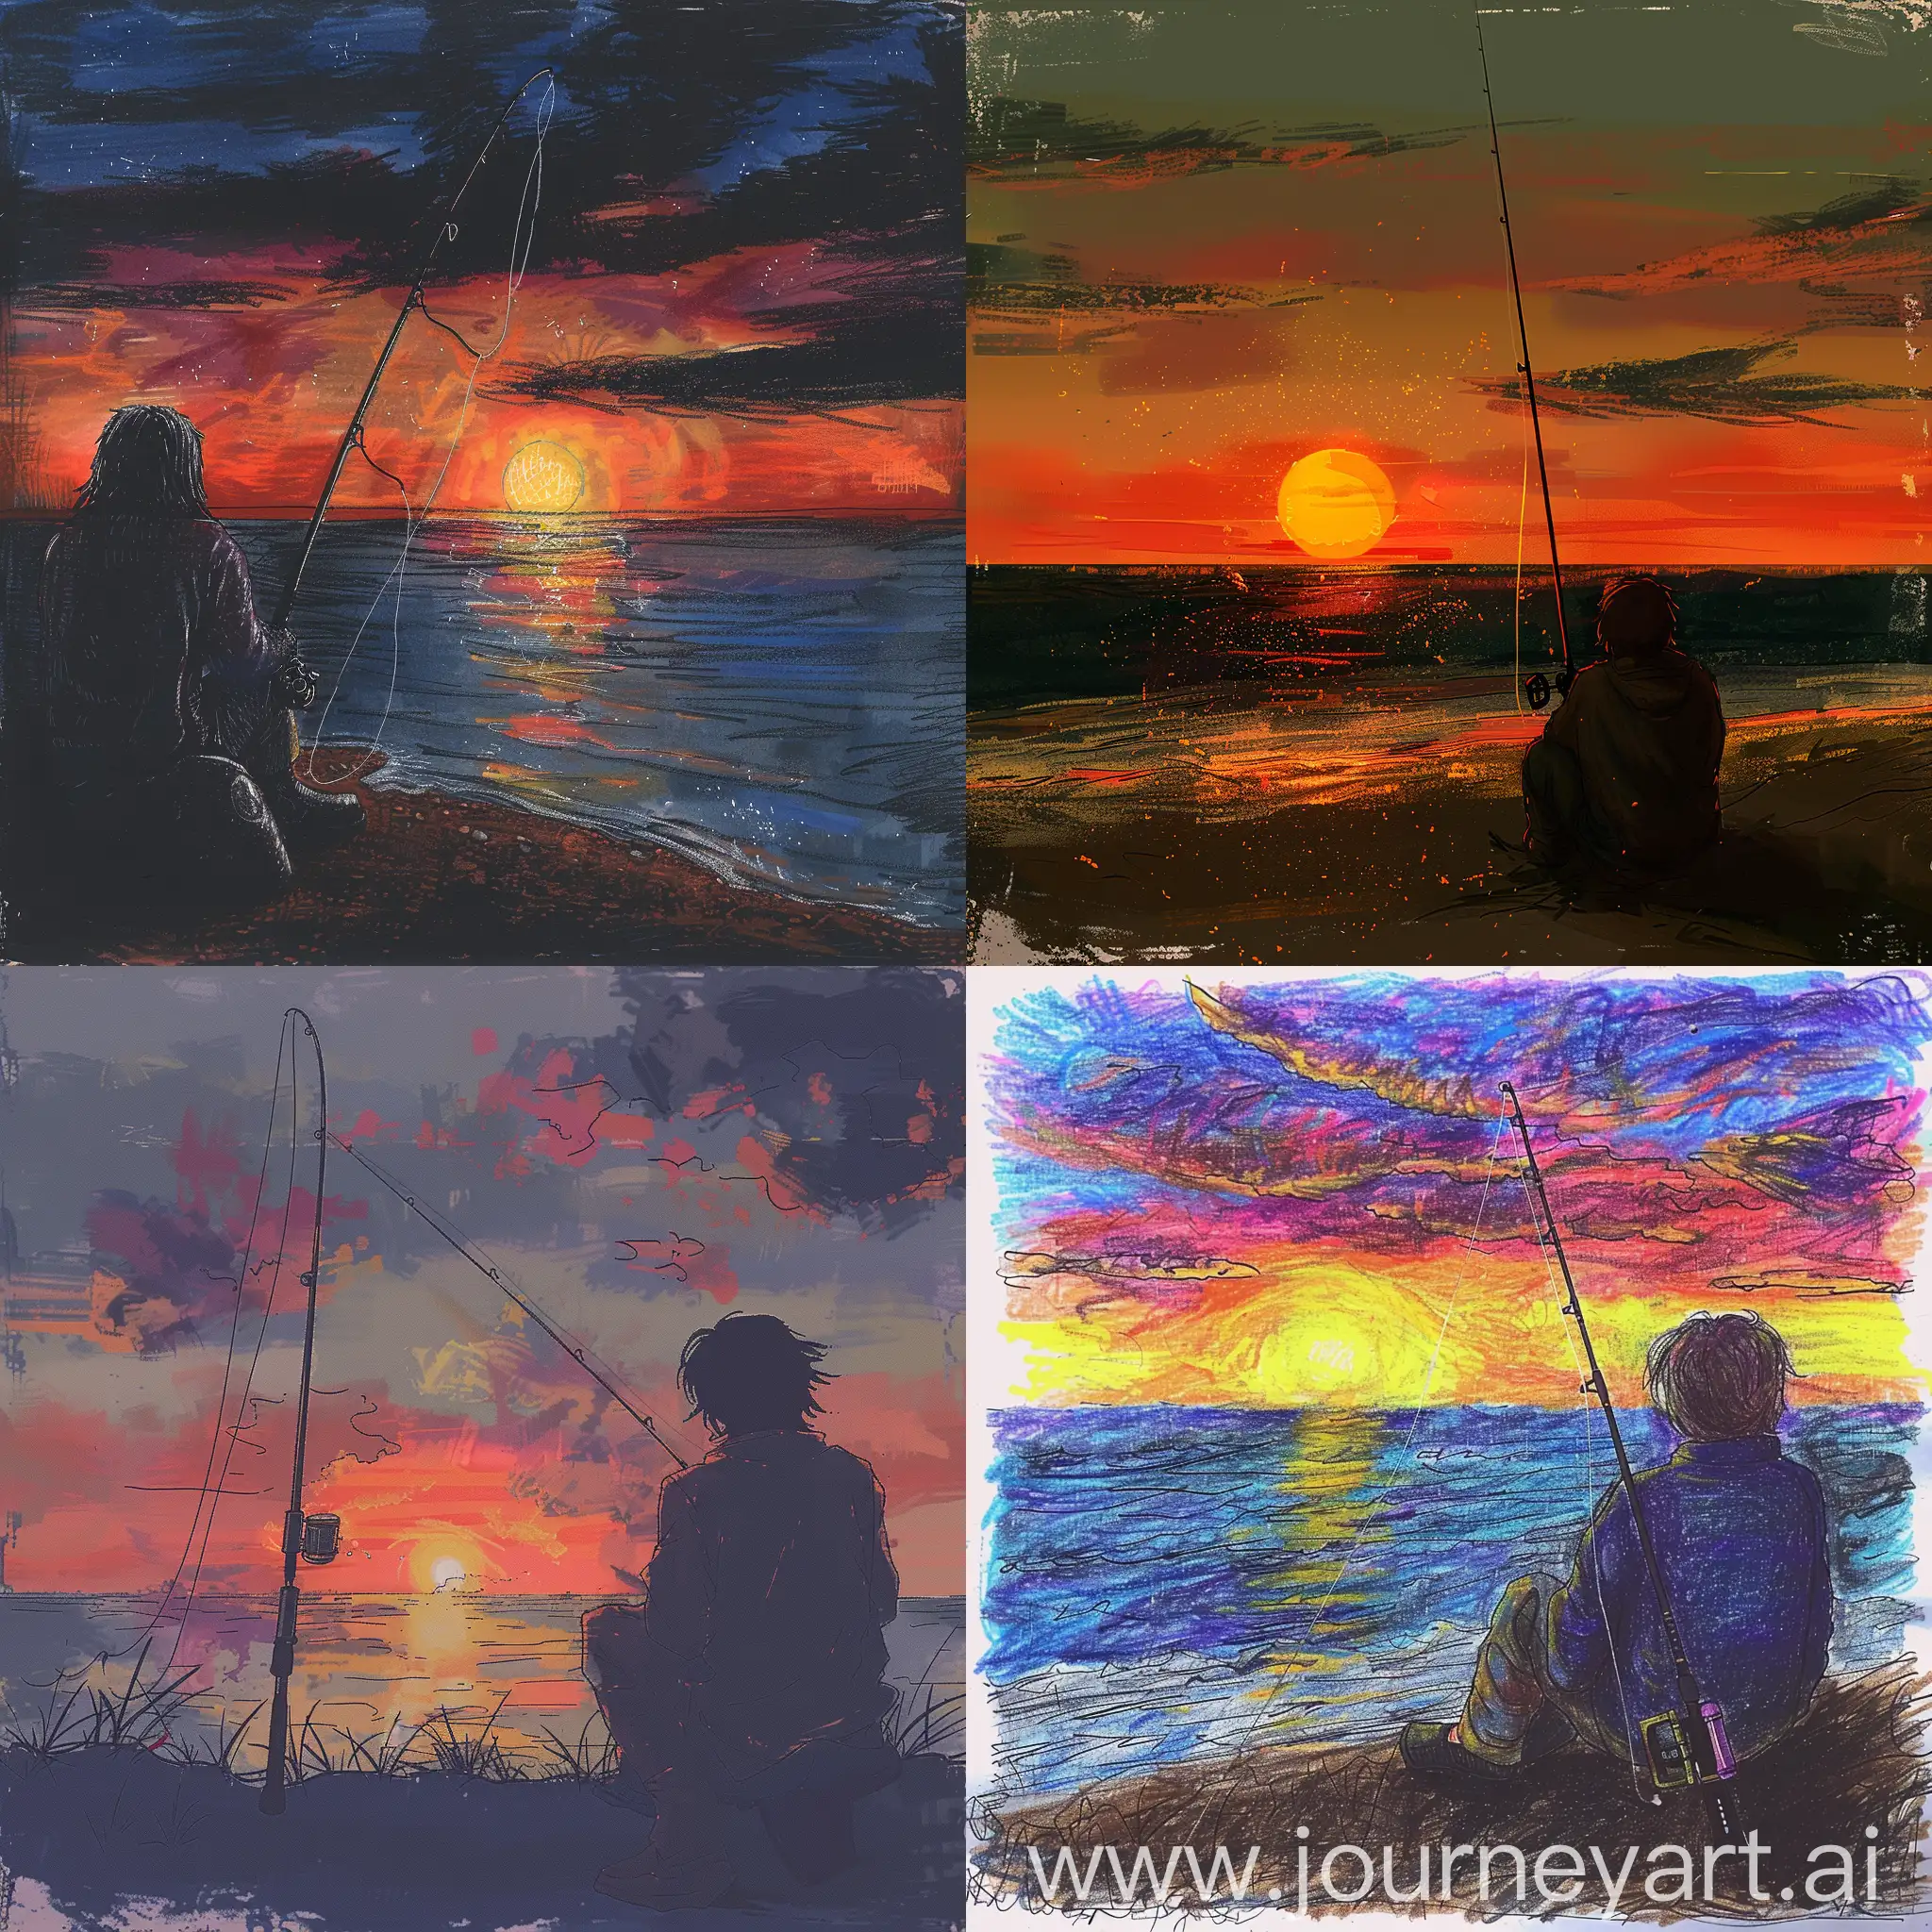 Solitary-Fisherman-Gazing-at-Sunset-on-Beach